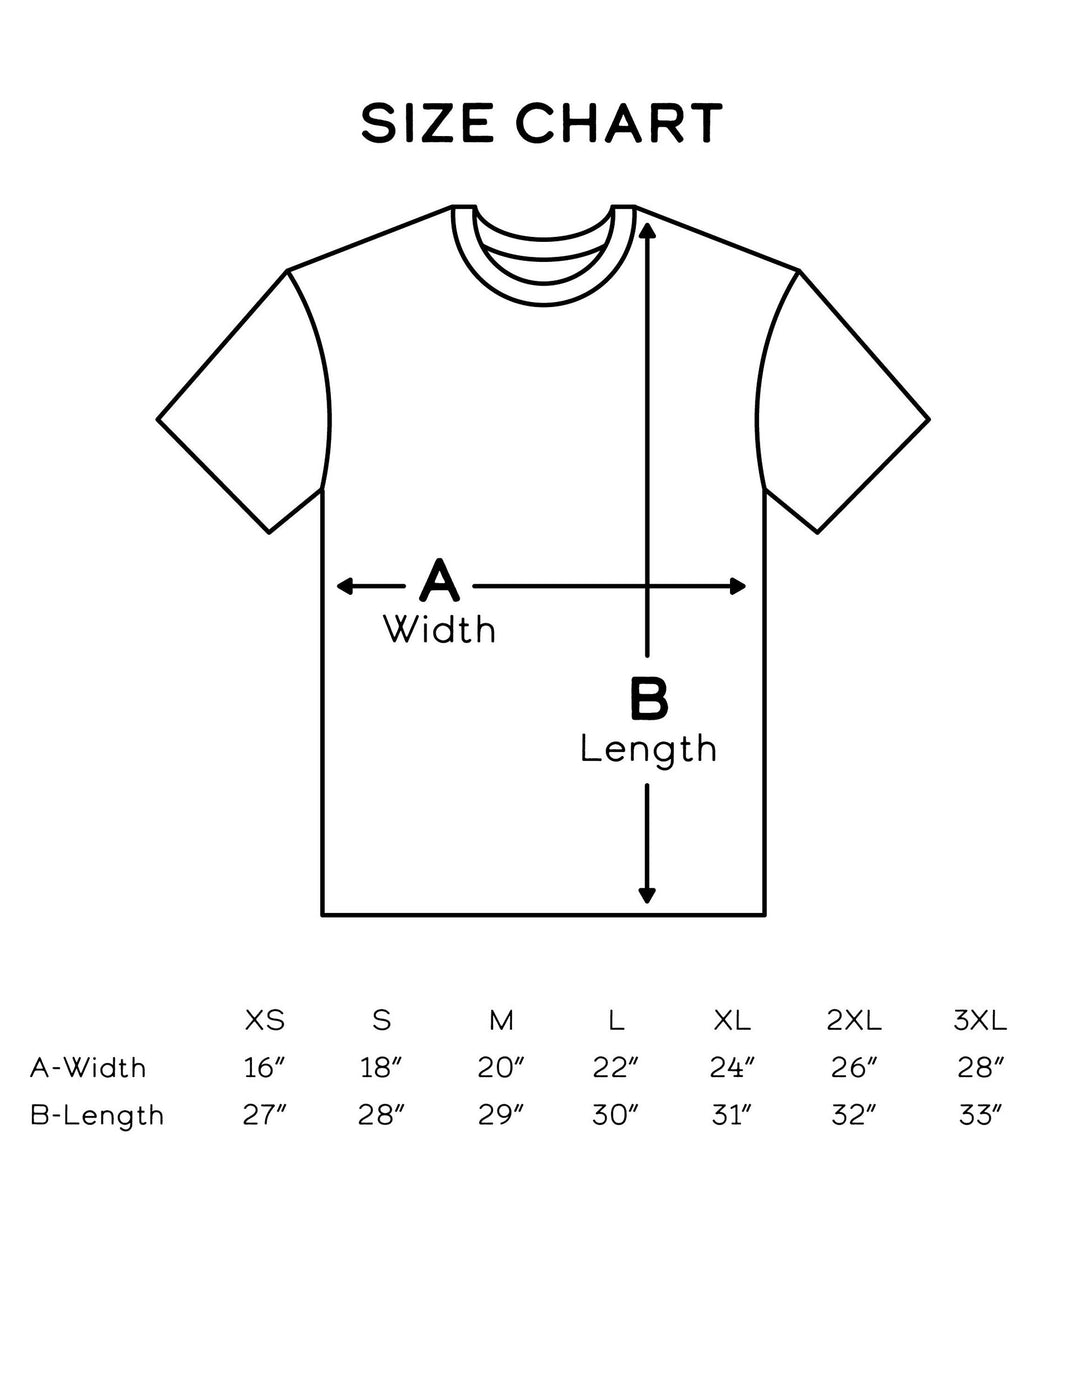 Trill Knicks Tee | Retro Jordan 3 Colorblock T-shirt |